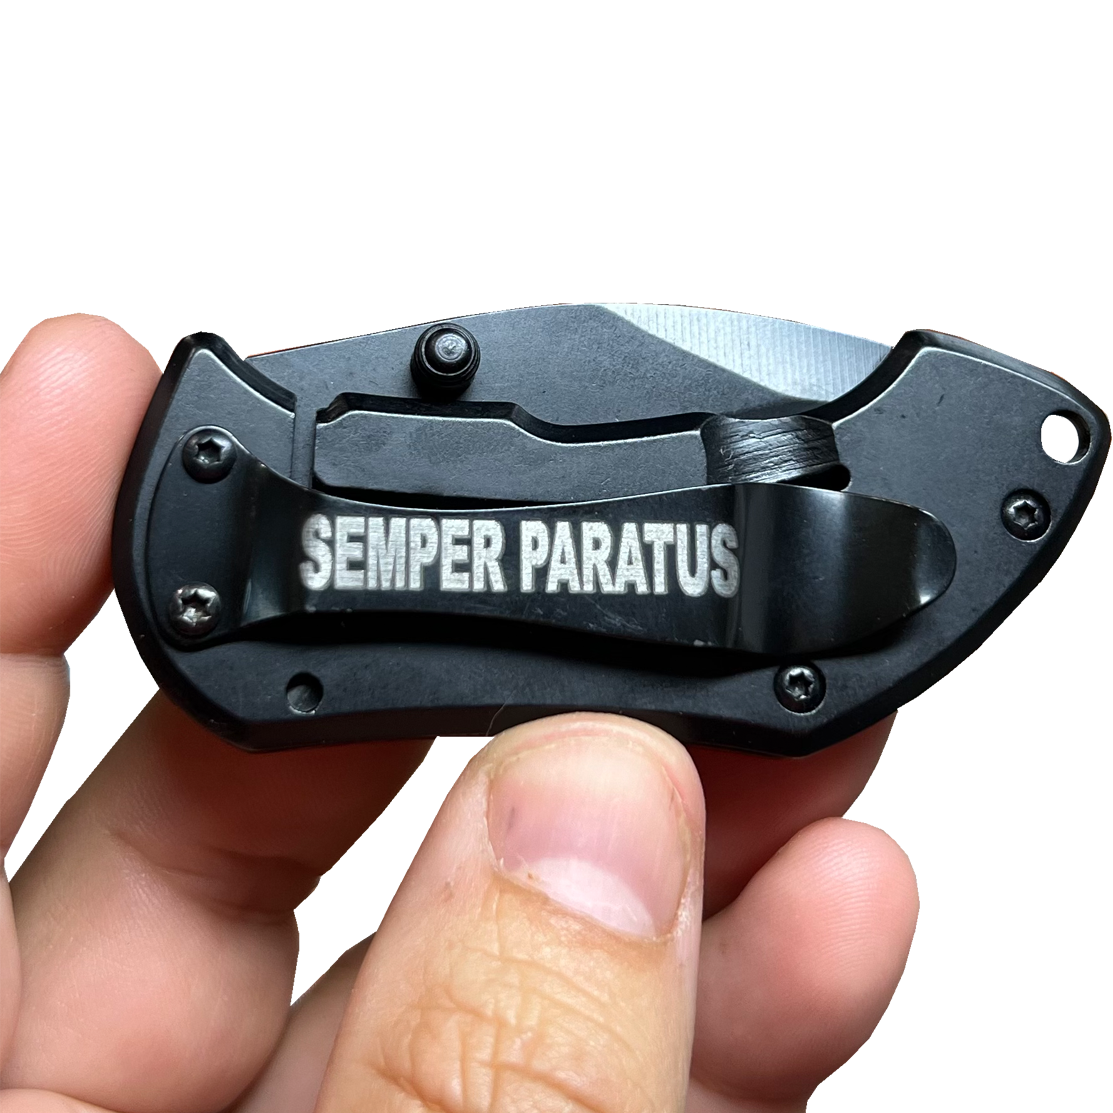 GL2-019 Tactical Frame Lock tool with pocket clip Coast Guard USCG Coastie SEMPER PARATUS Tactical Knife with Razor Sharp Blade